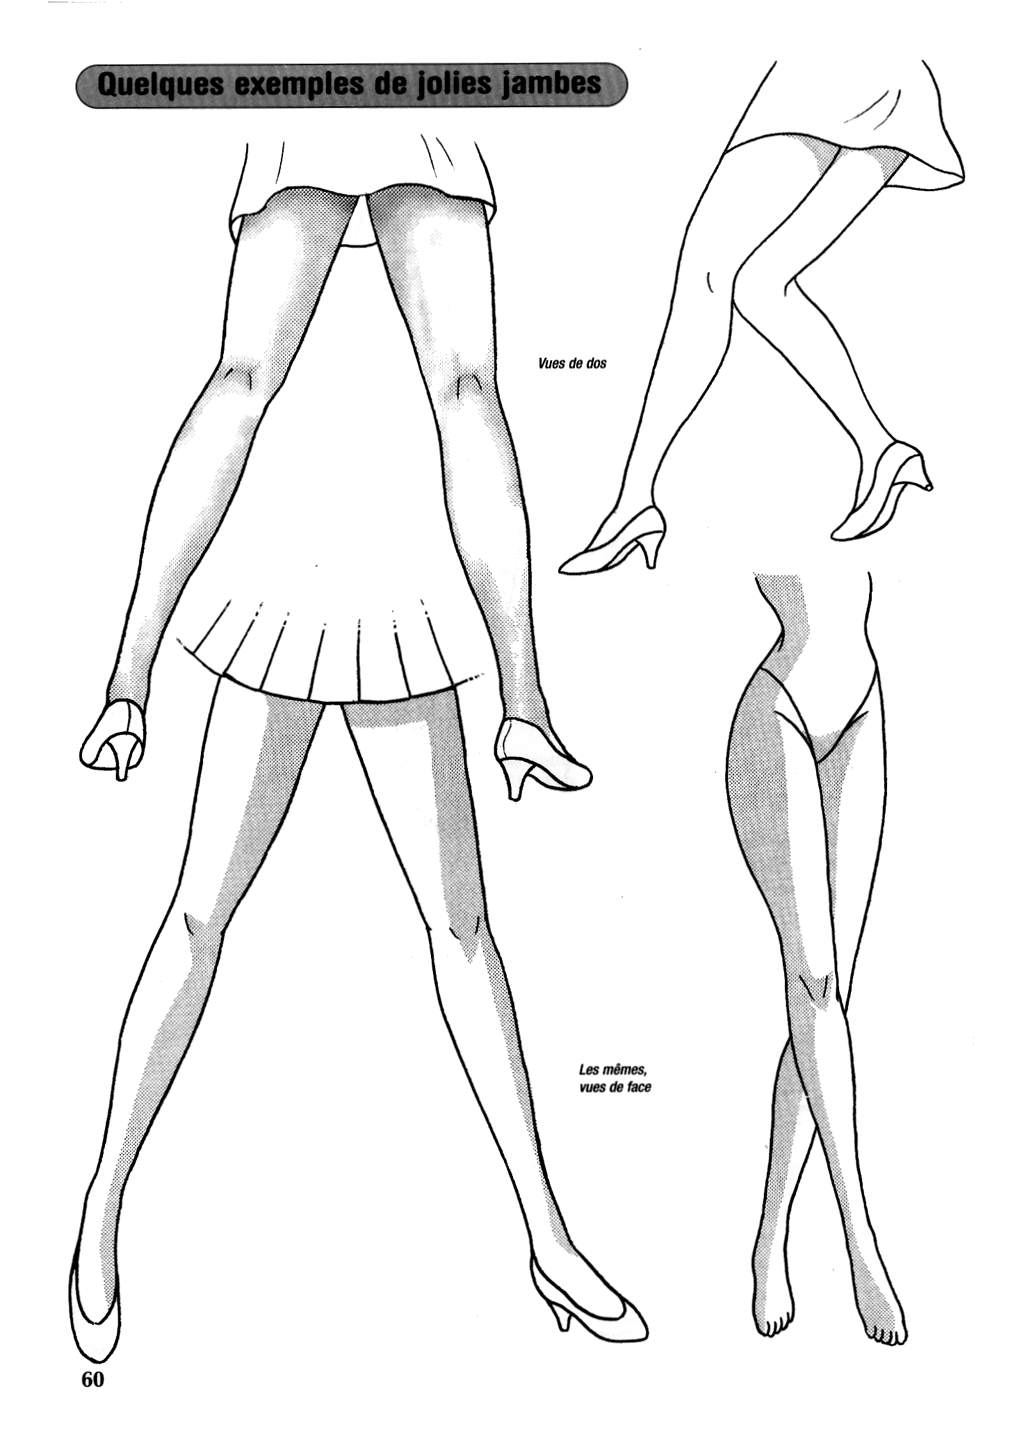 Le dessin du Manga 04 - Personnages feminin, Attitudes, Expressions numero d'image 60